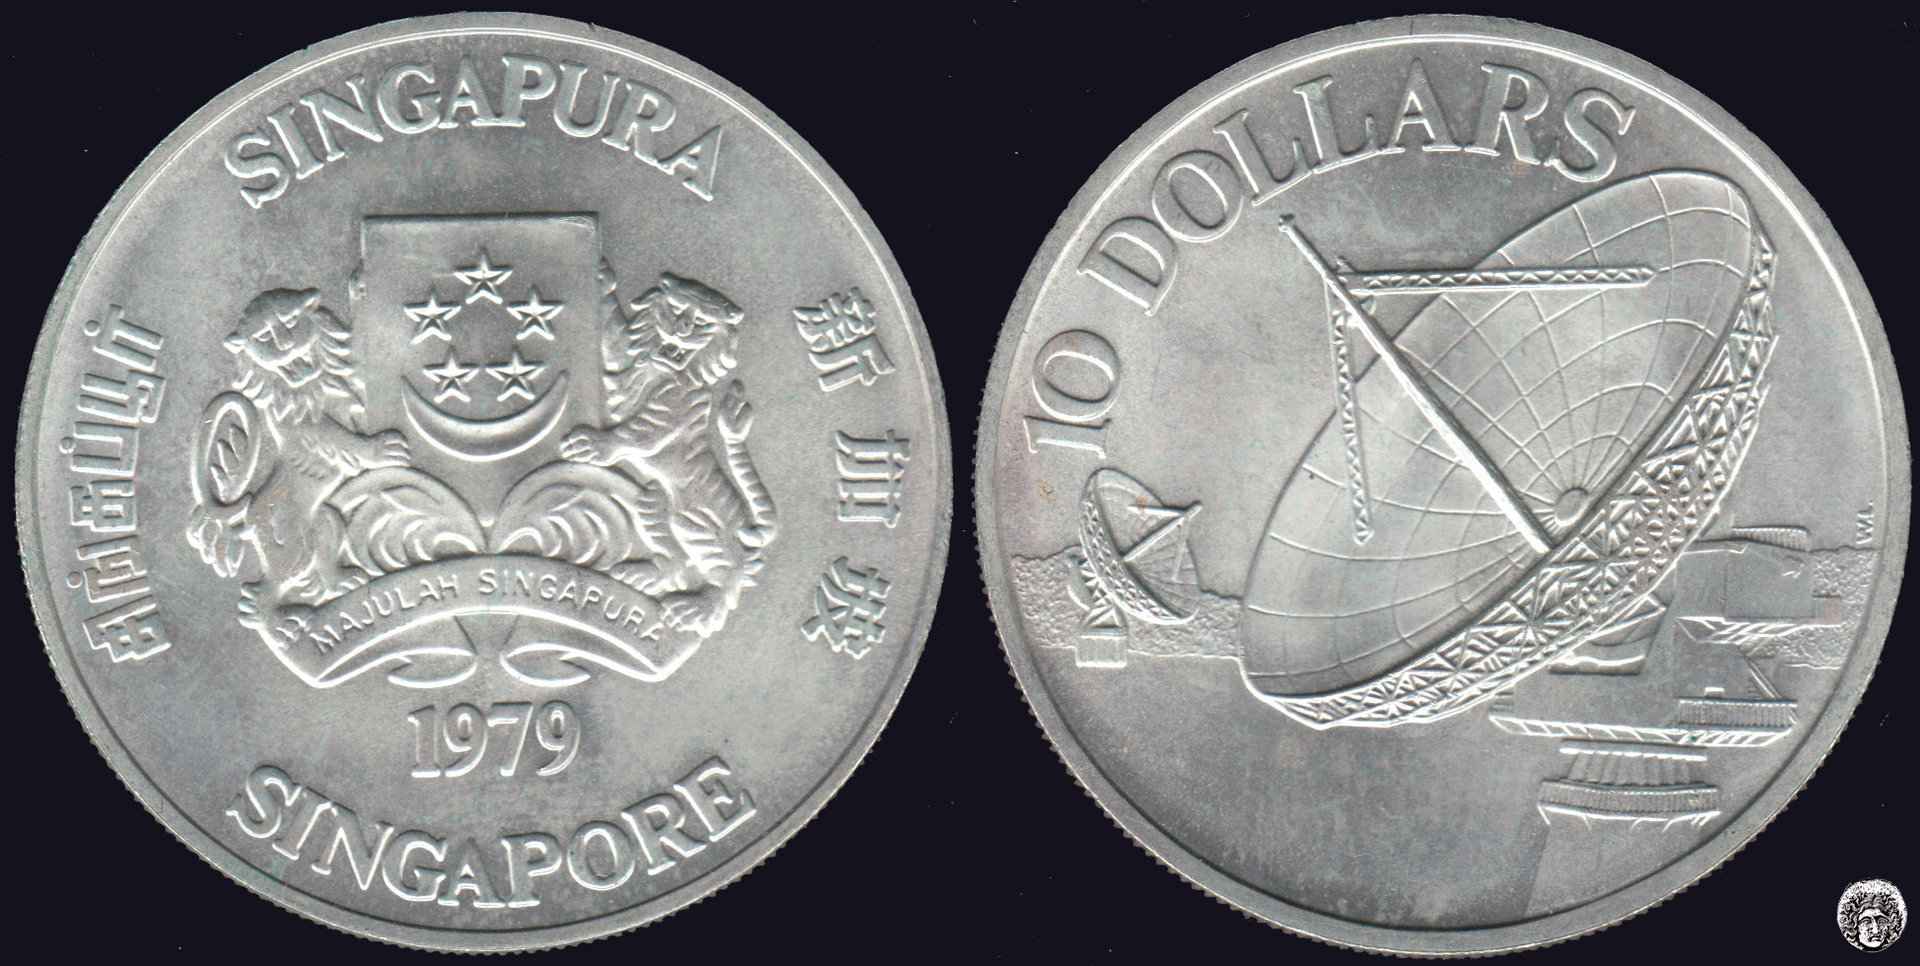 SINGAPUR - SINGAPORE. 10 DOLARES (DOLLARS) DE 1979. PLATA 0.500. (2)